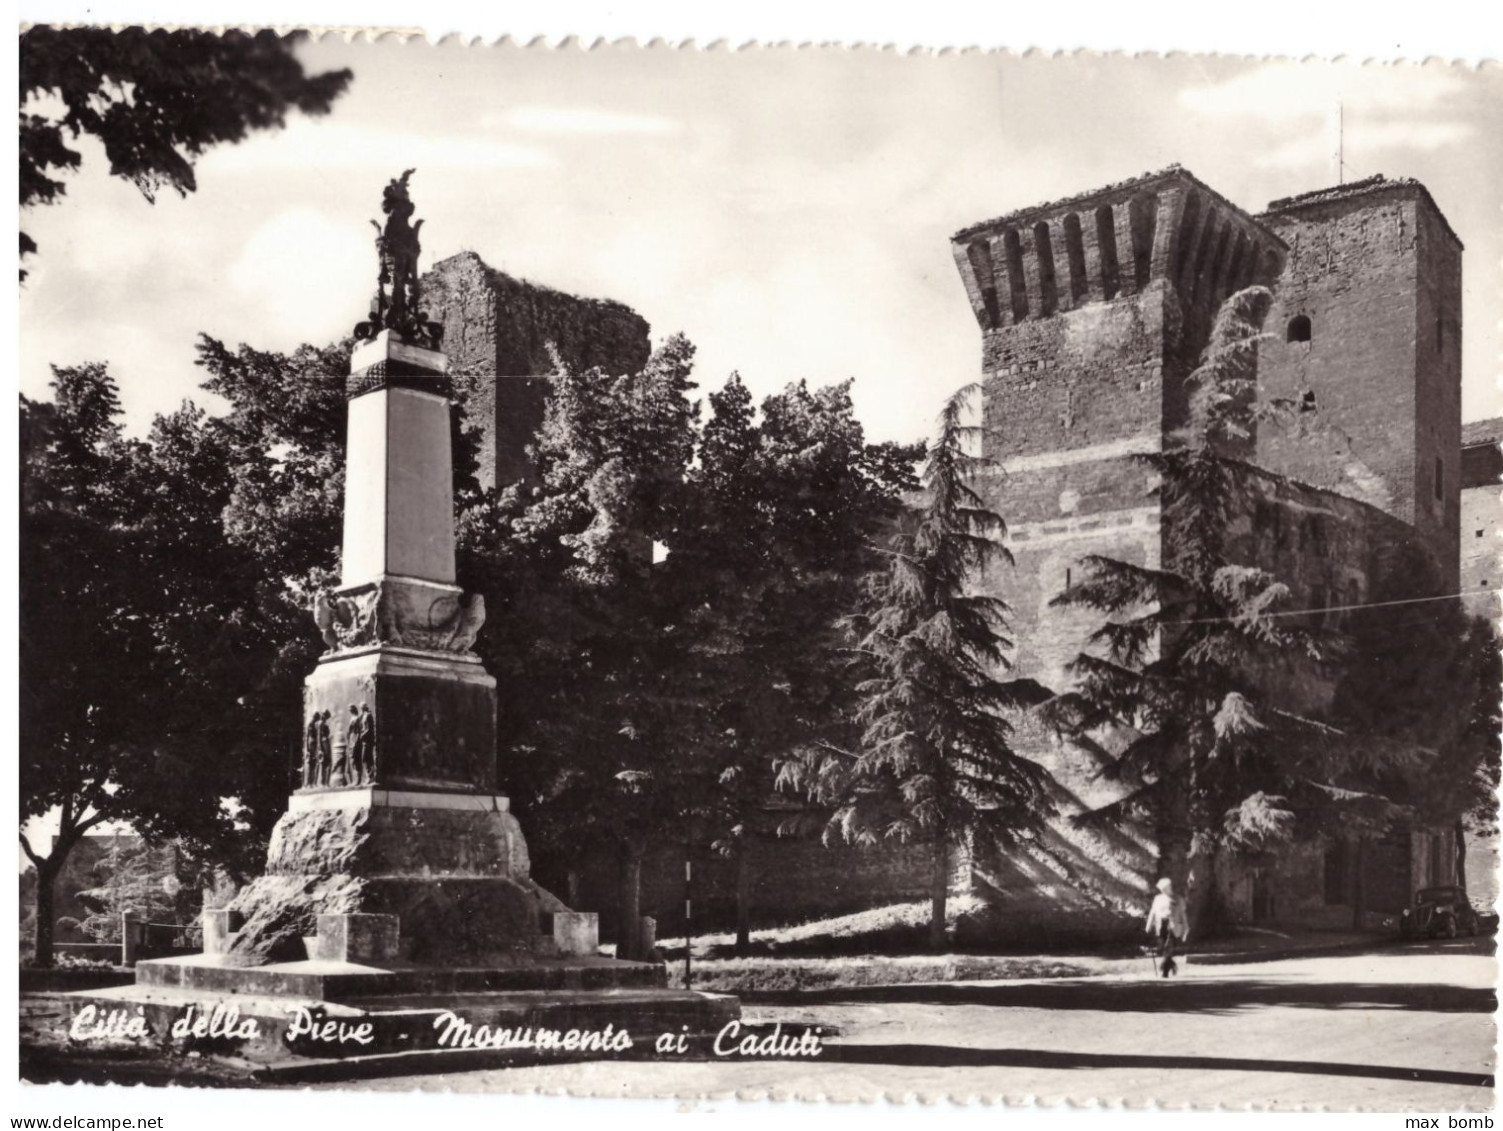 1953 CITTA' DELLA PIEVE   2  MONUMENTO AI CADUTI   PERUGIA - Perugia